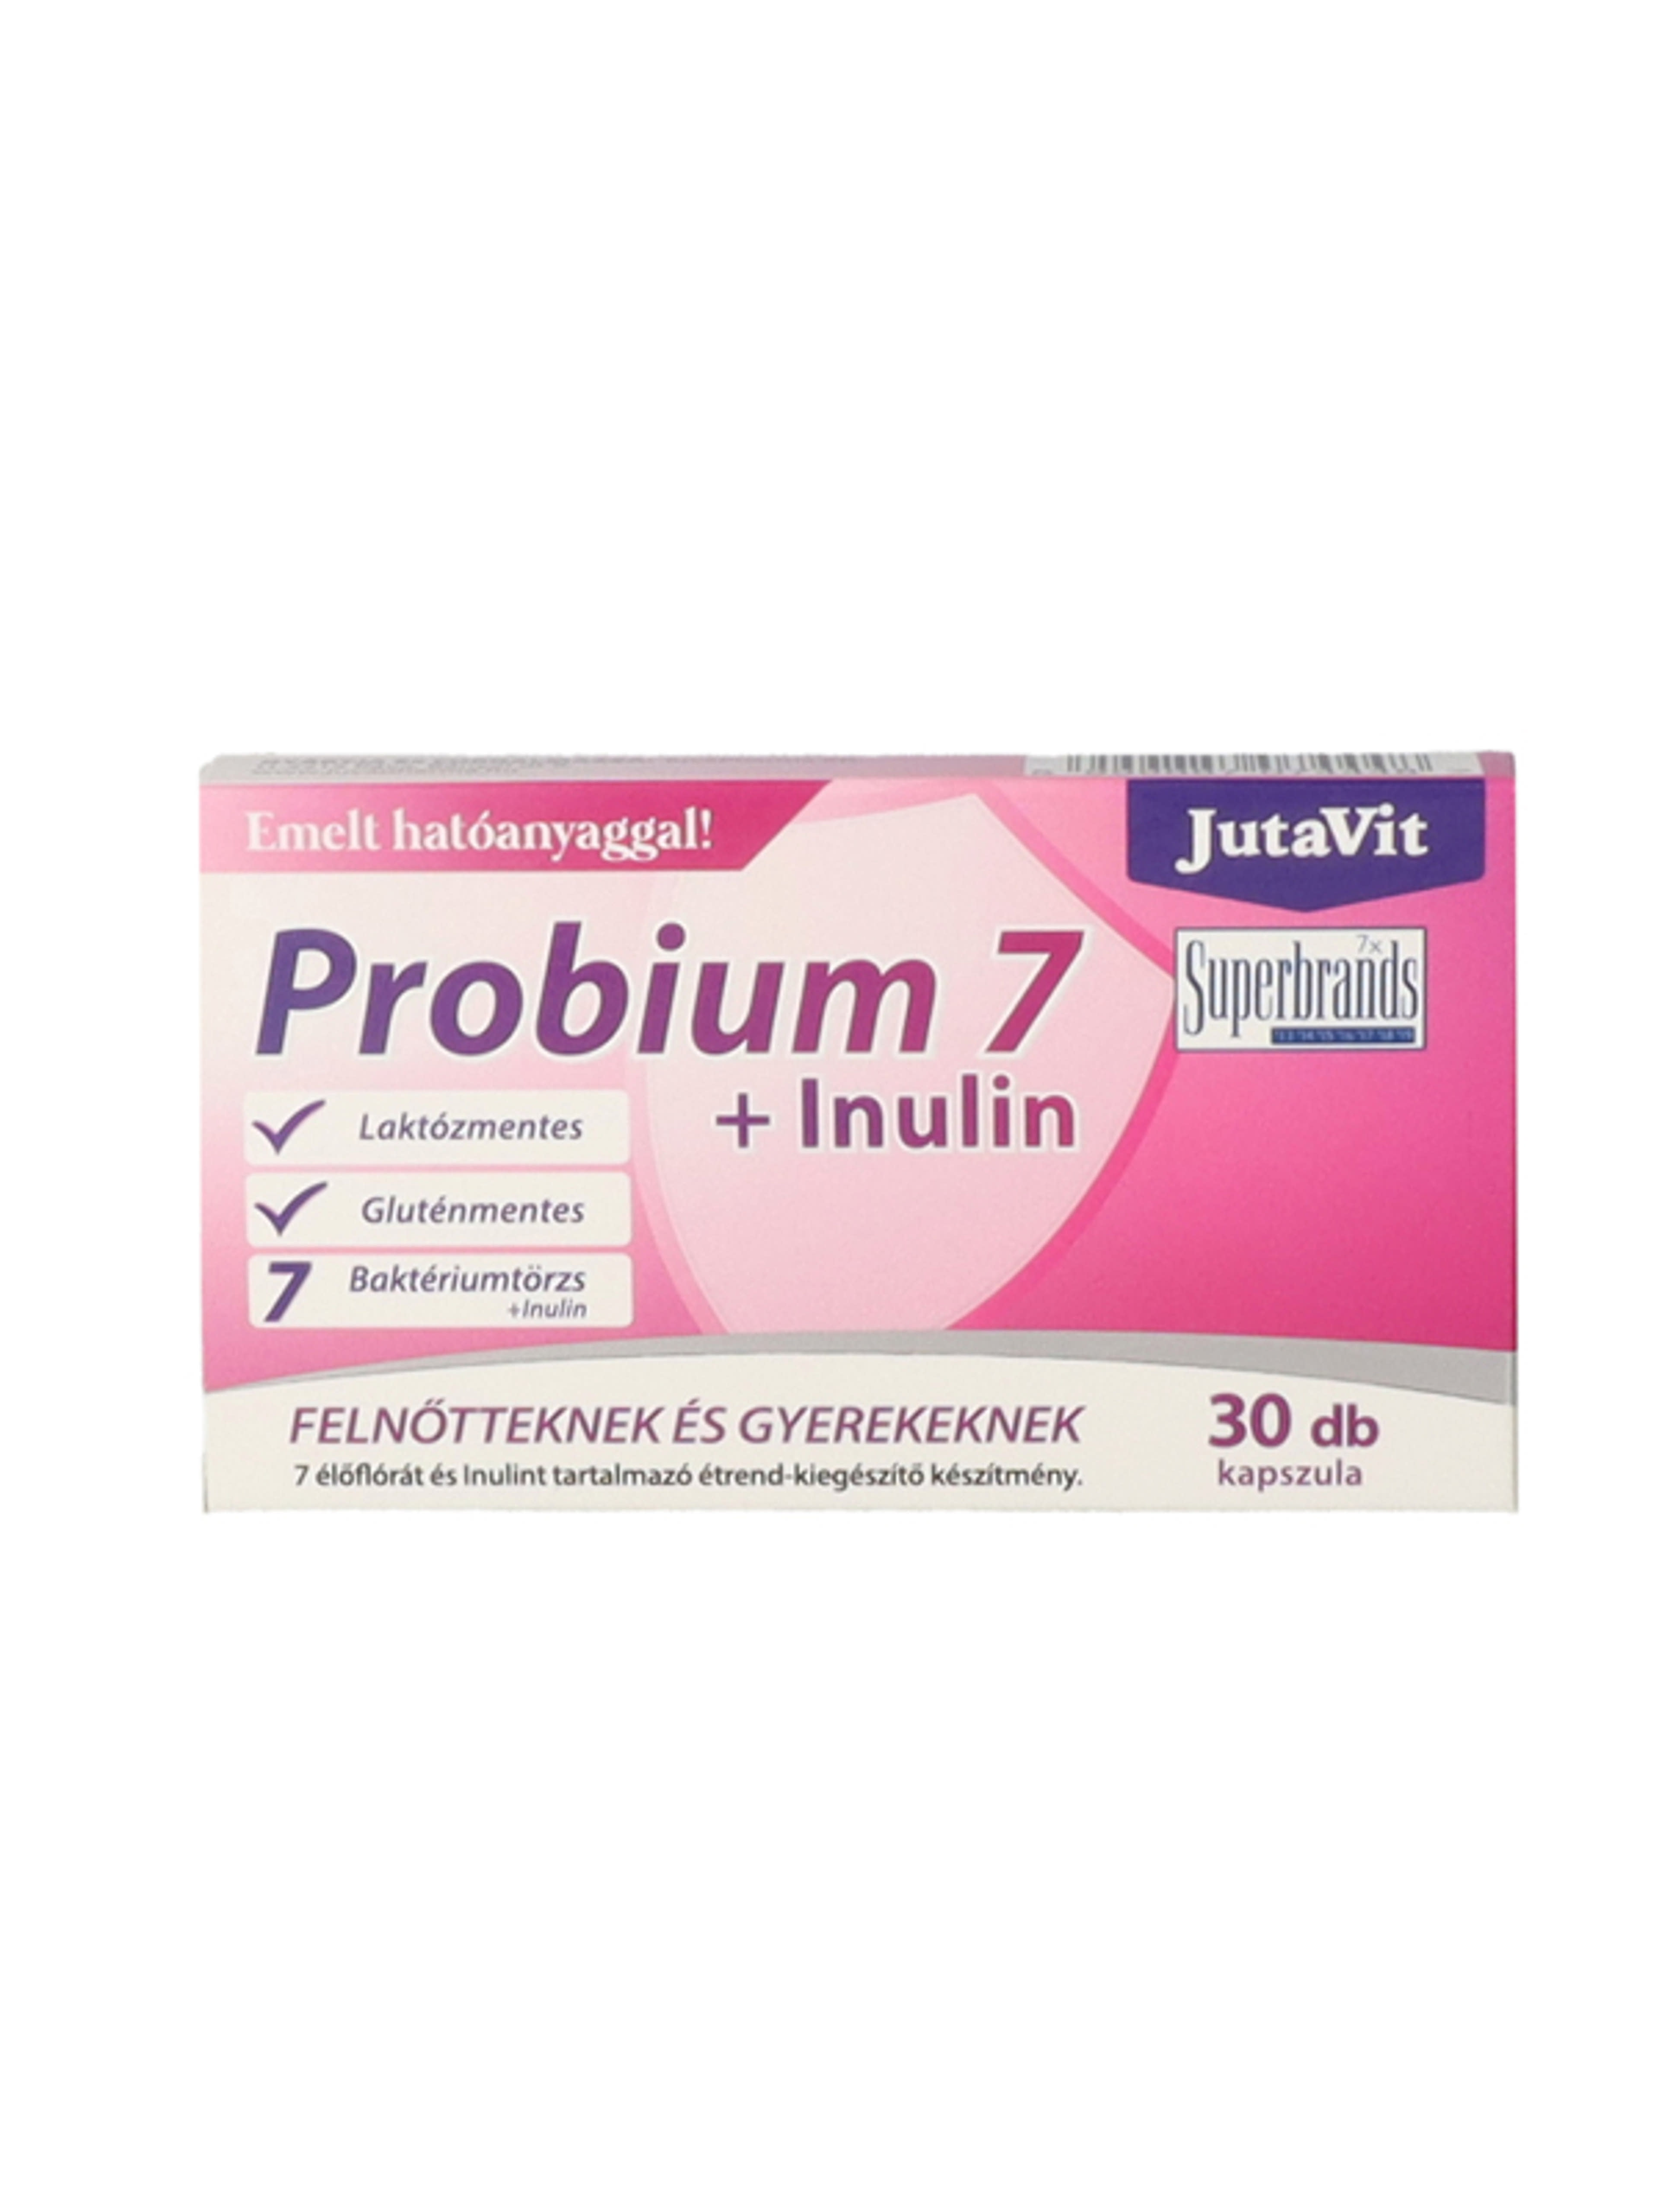 Jutavit probium7+inulin kapszula - 30 db-1